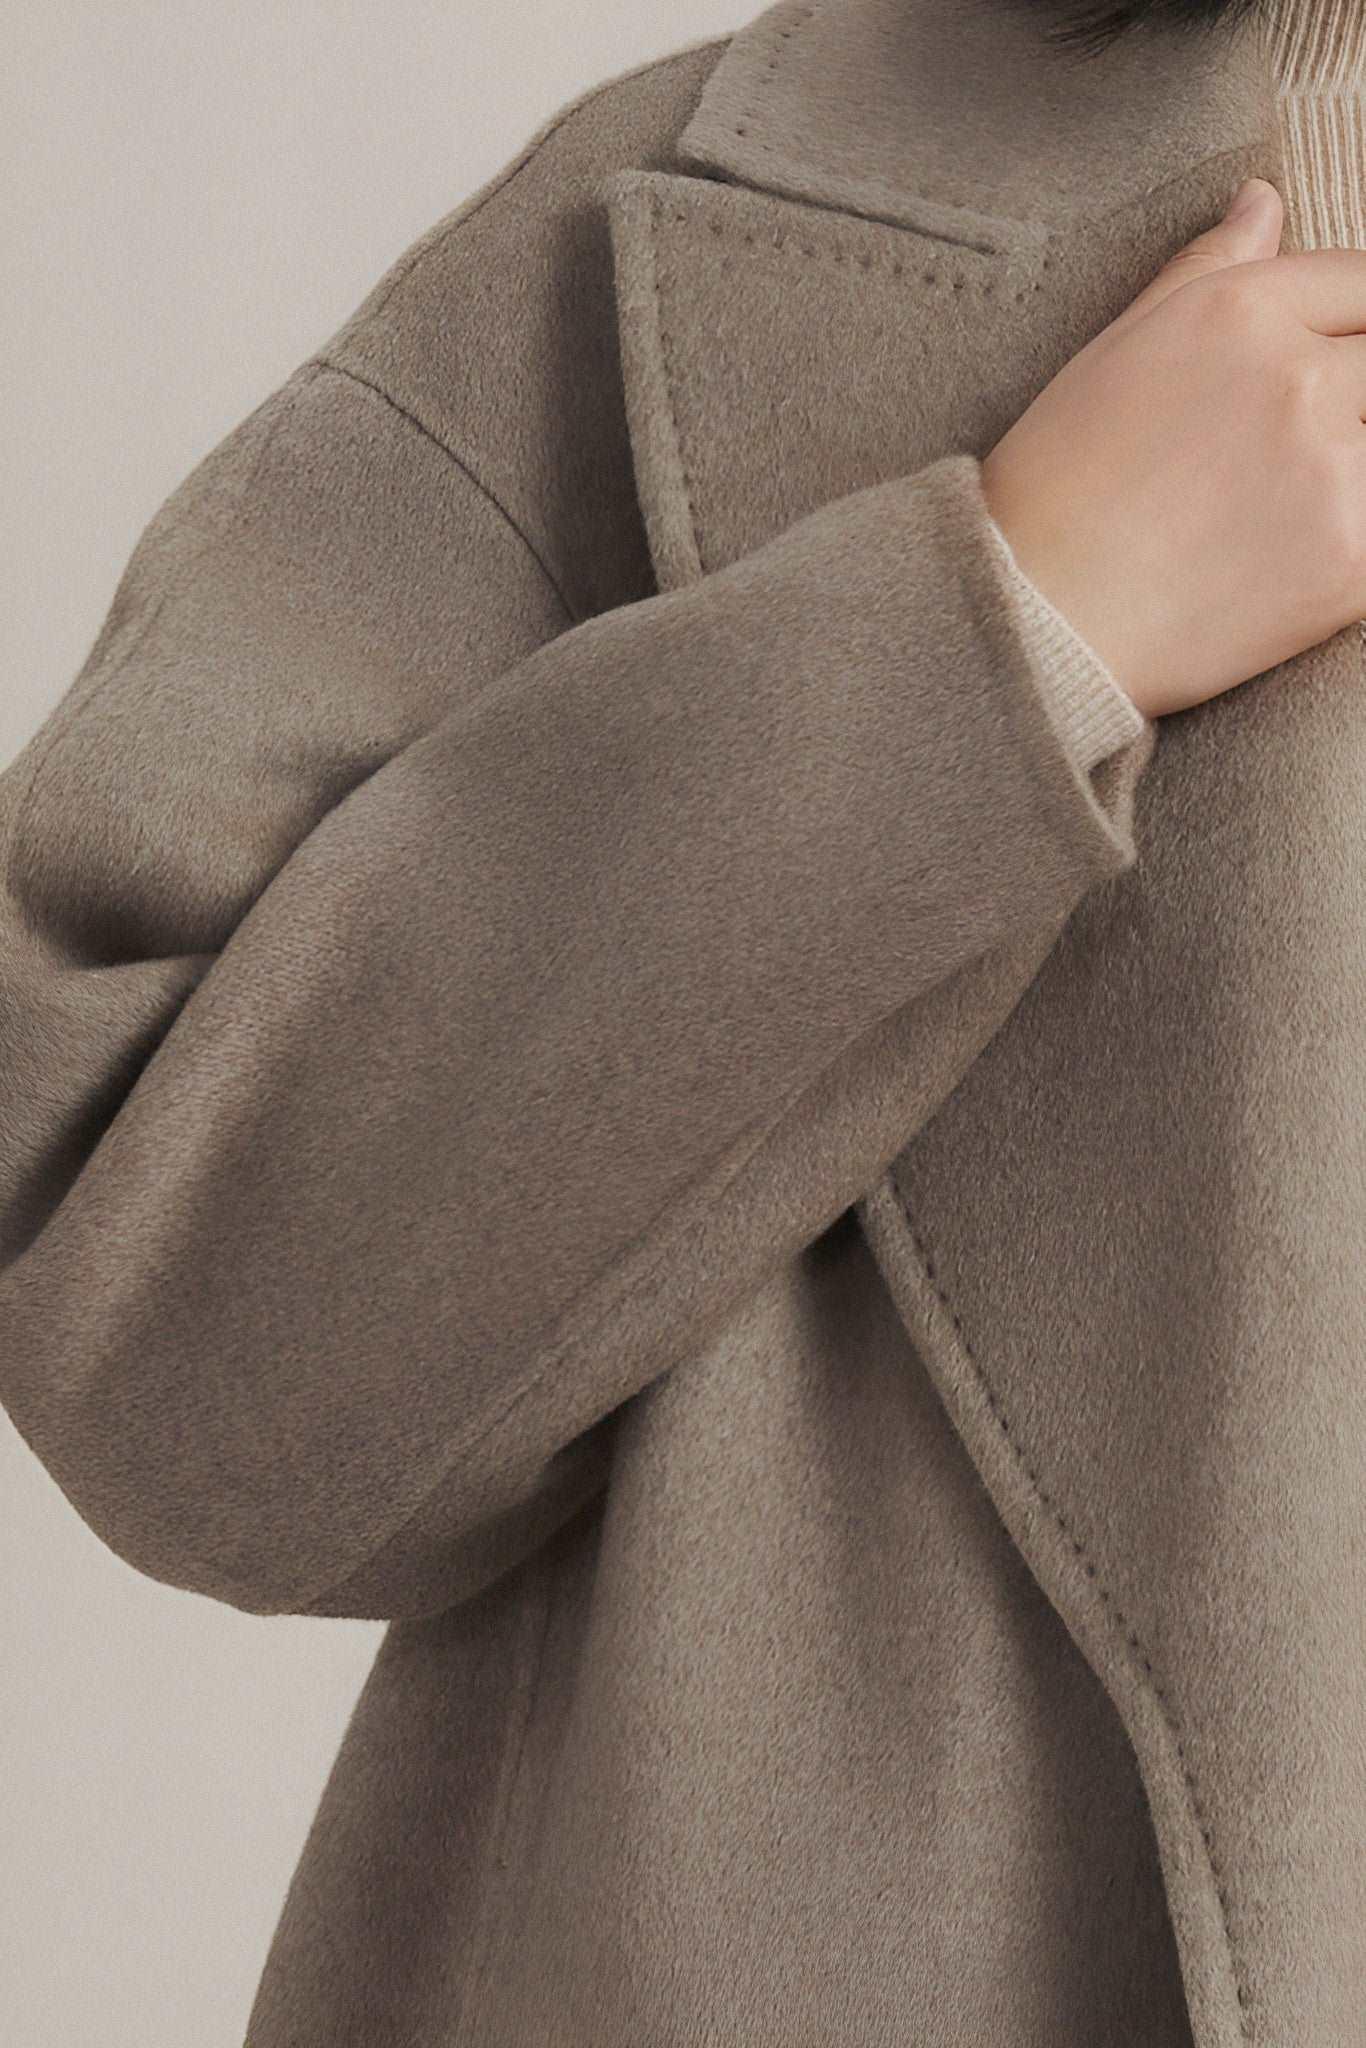 LYDIA - Medium-Length Woolen Women's Overcoat